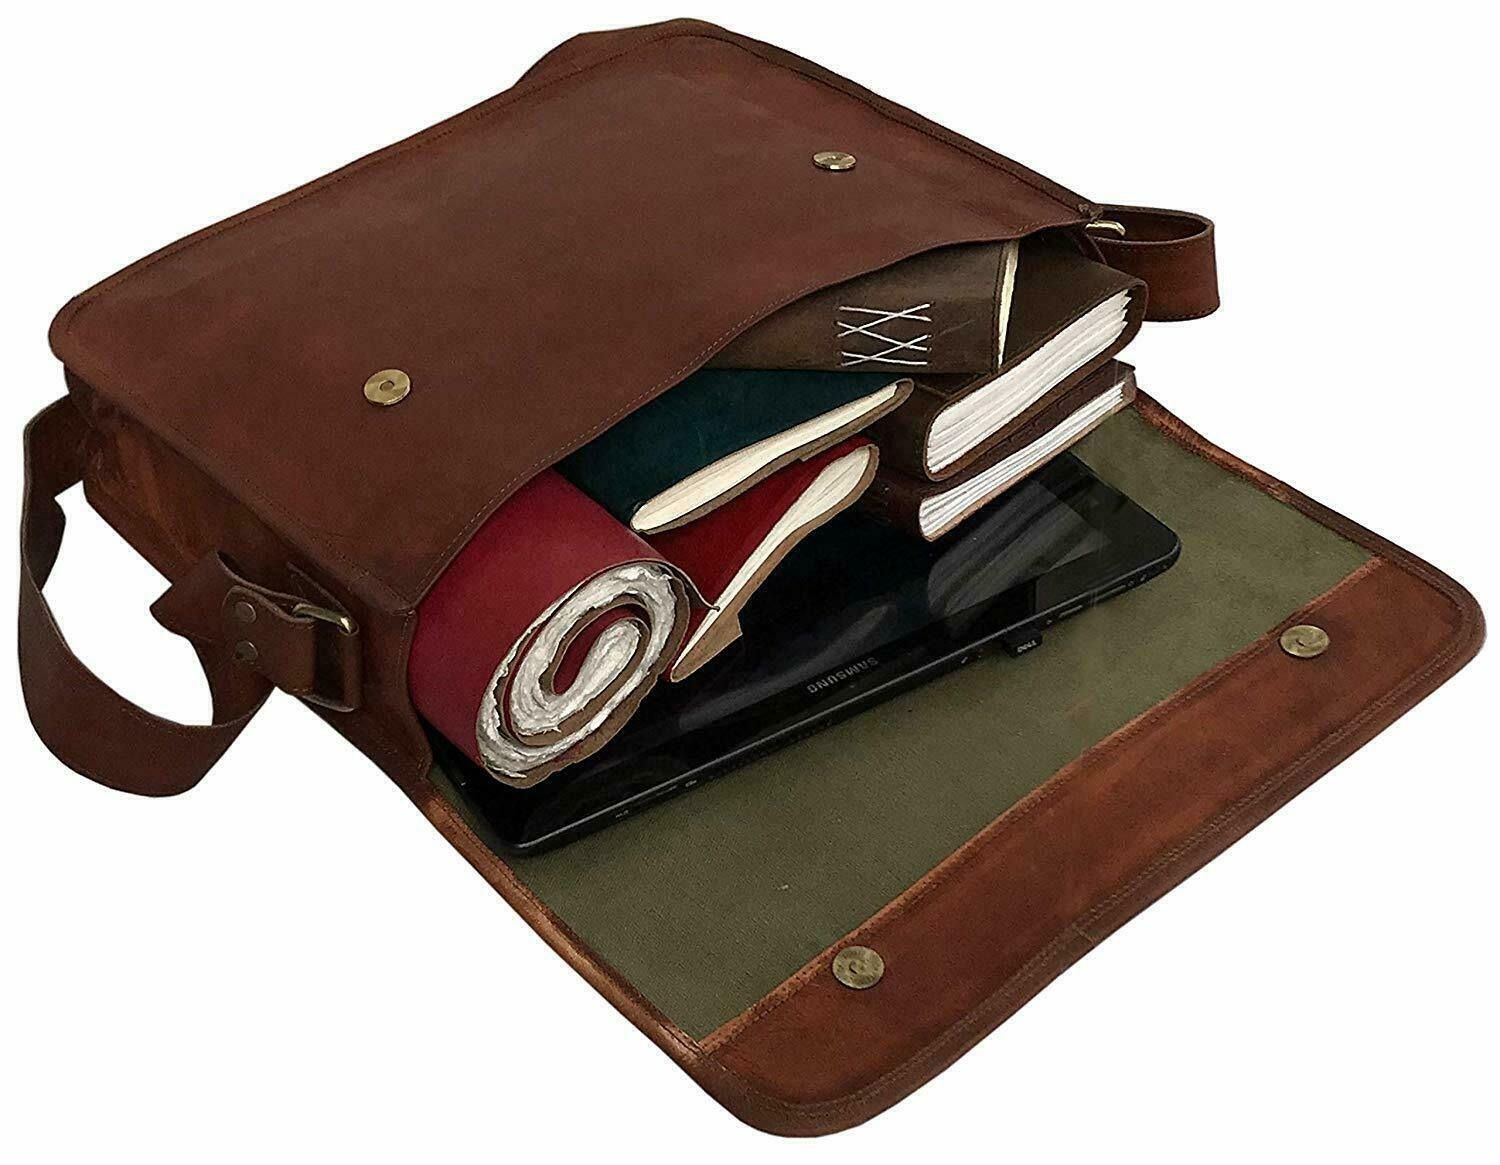 Craftshades handcrafted full flap leather messenger bag